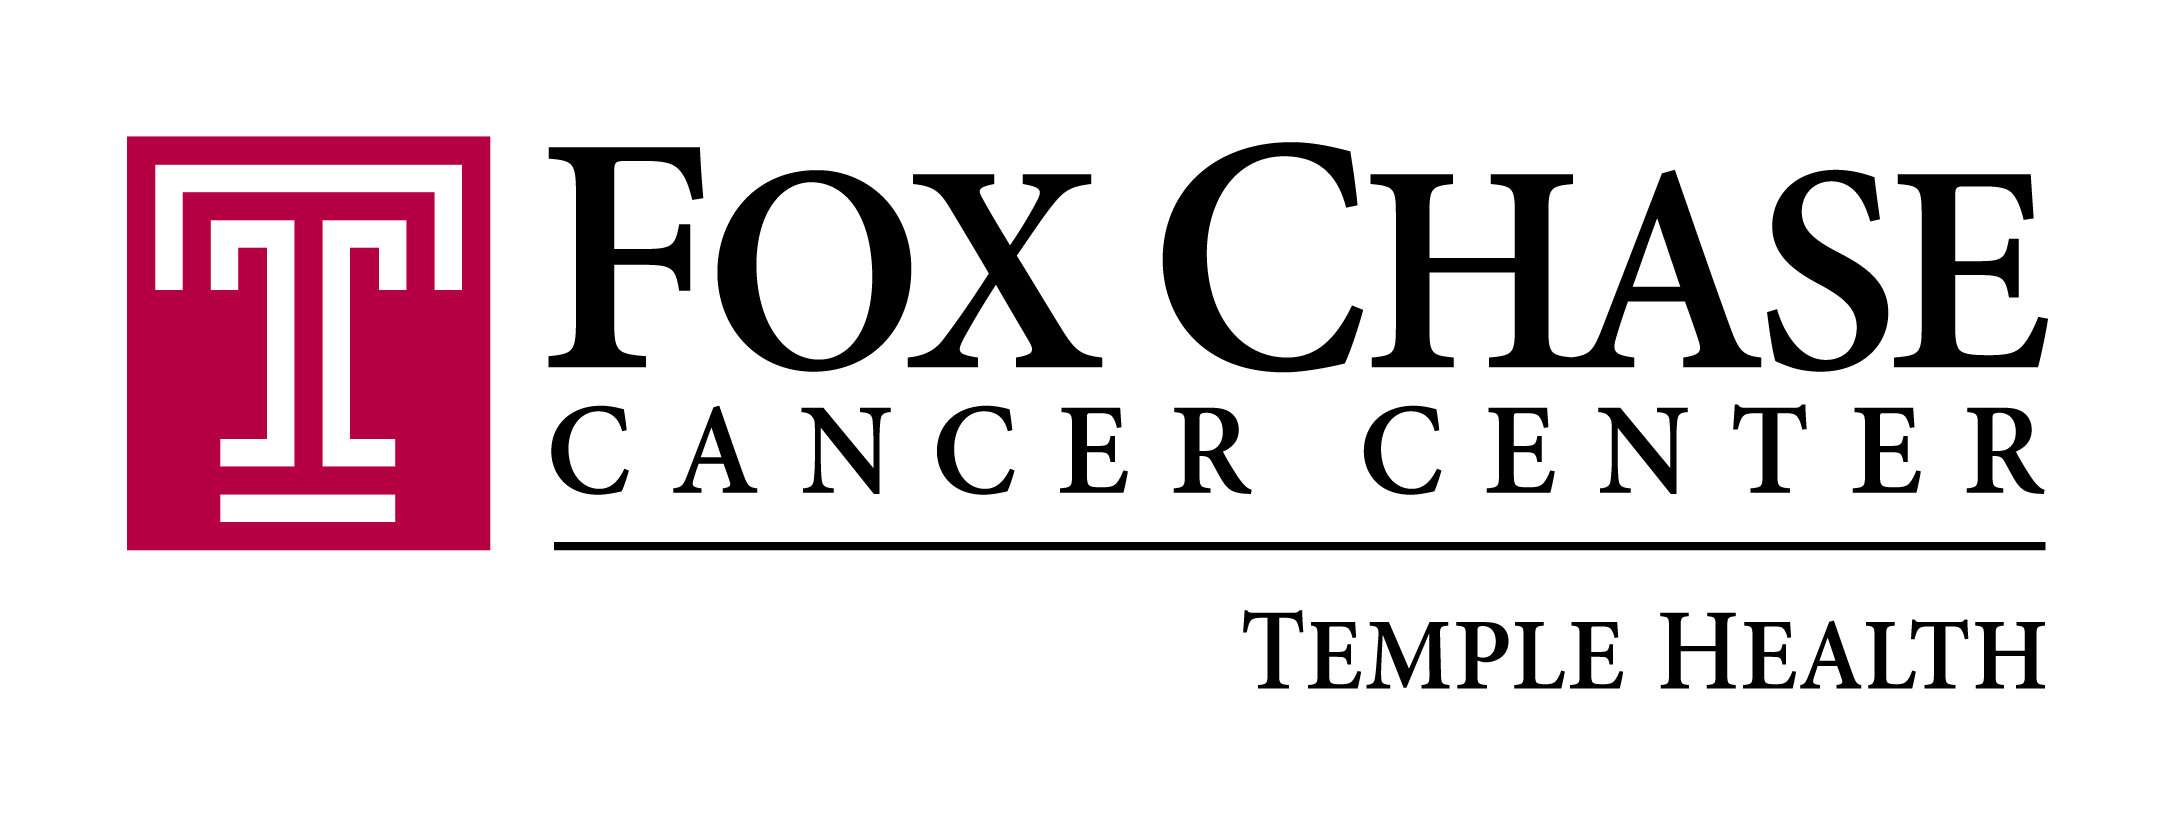 Fox Chase Cancer Center logo